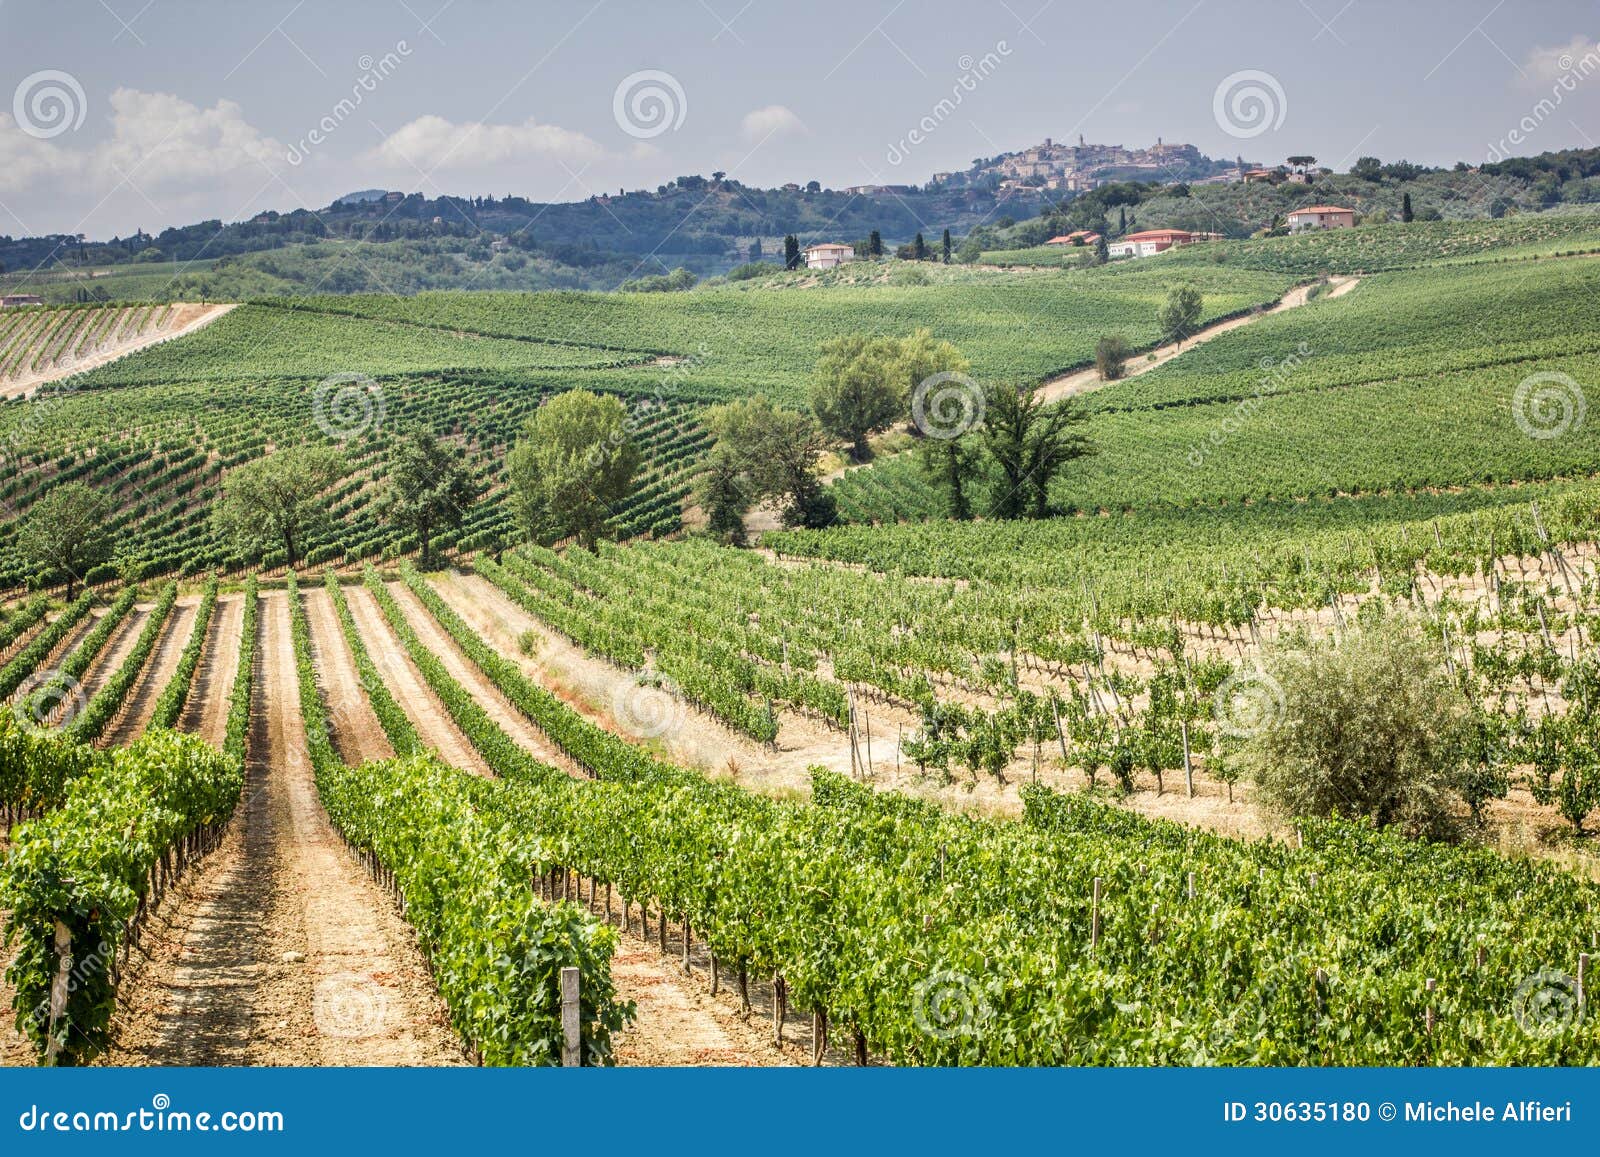 vineyard in the area of Ã¢â¬â¹Ã¢â¬â¹production of vino nobile, montepulciano, italy